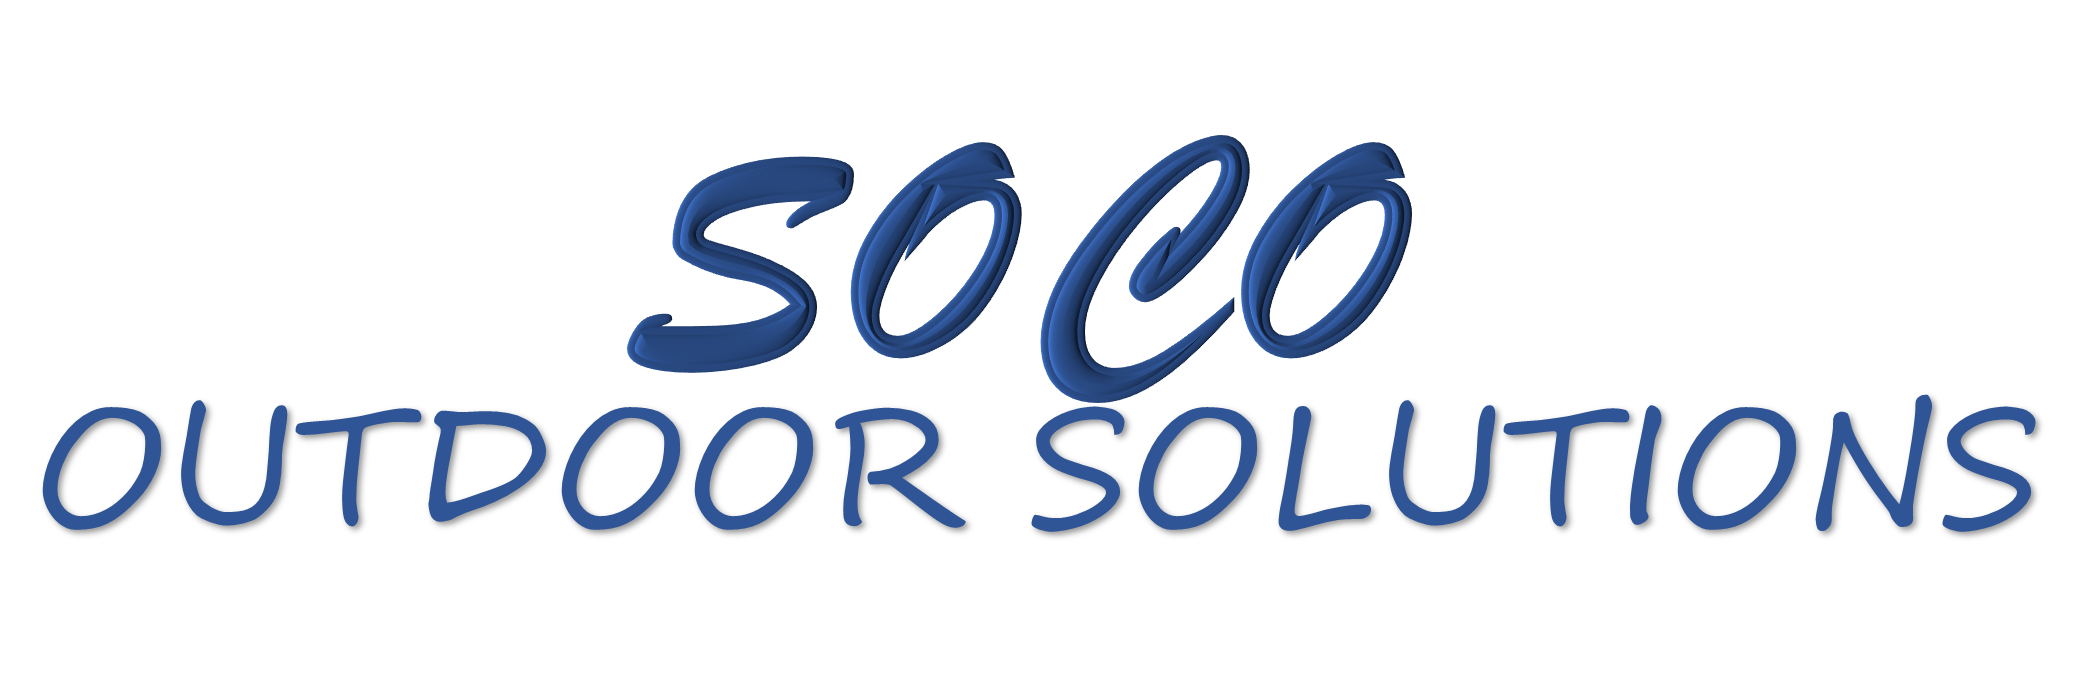 SOCO OS Logo